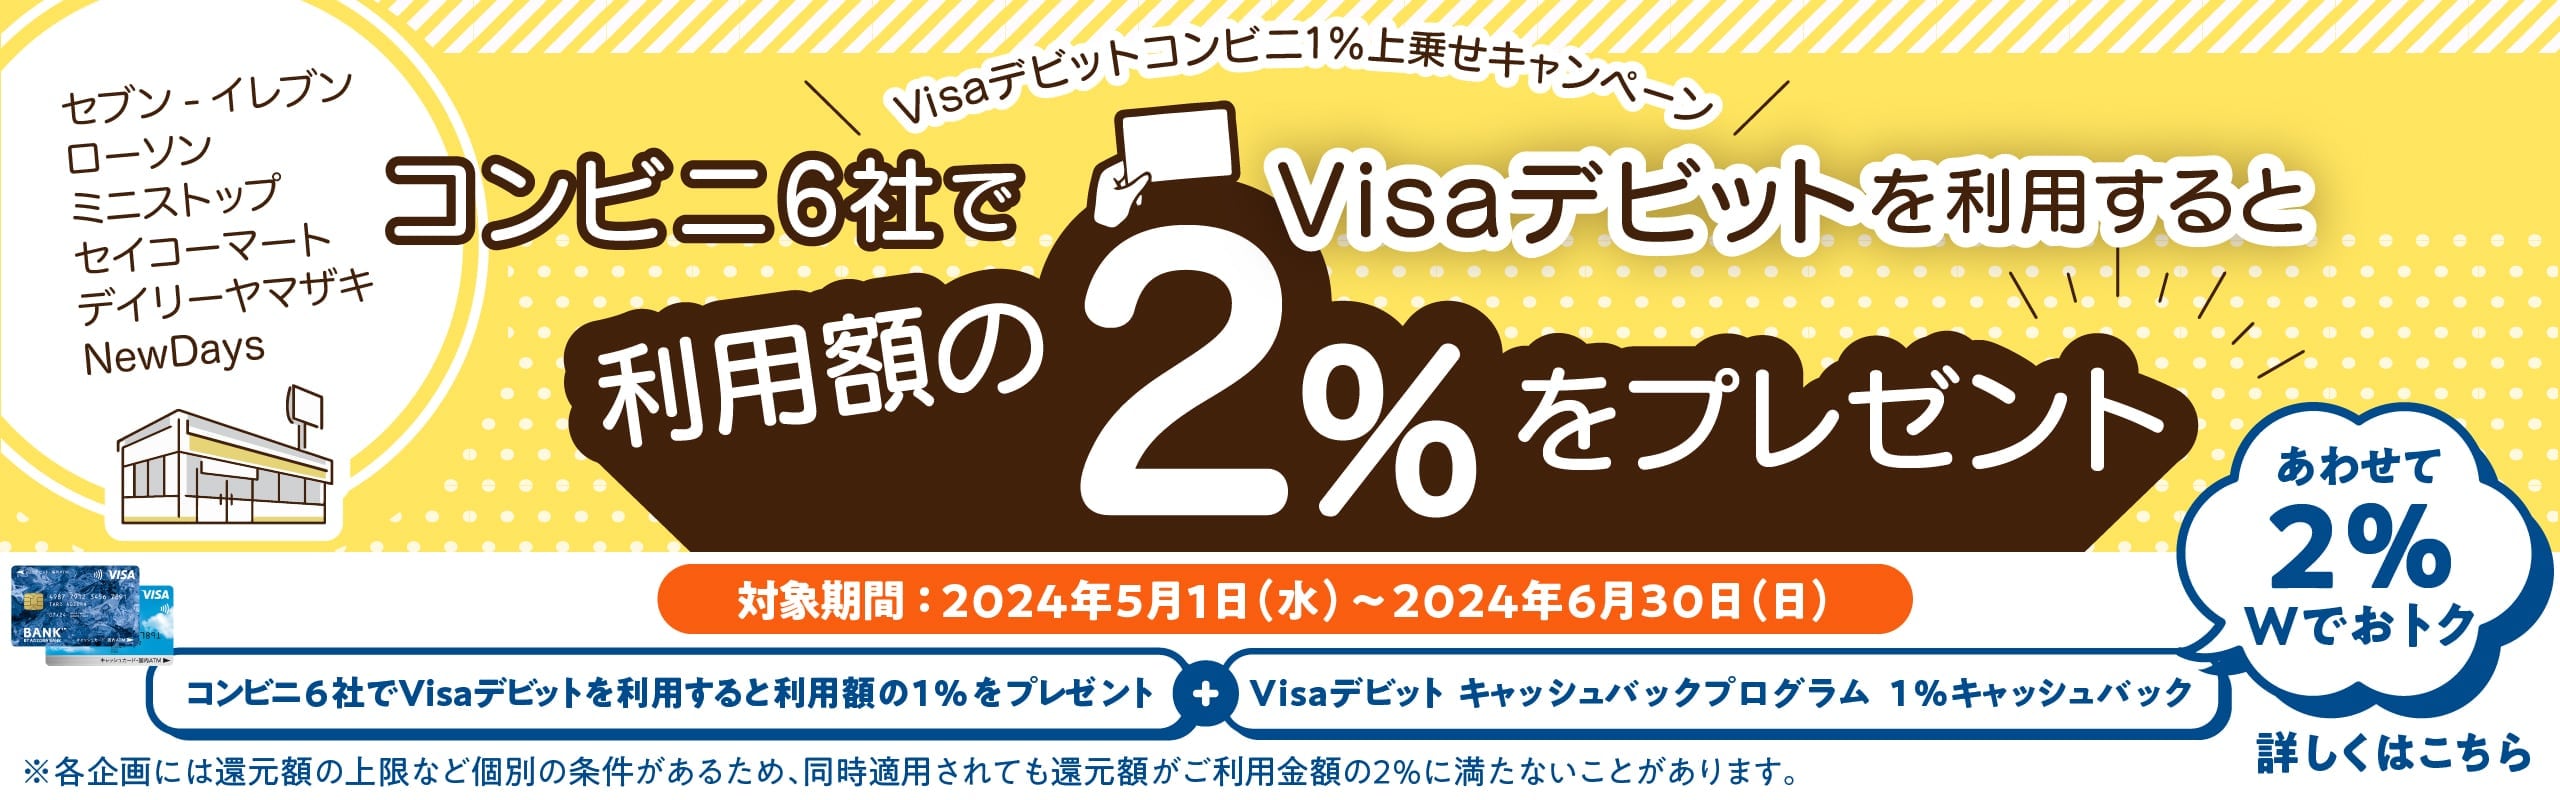 Visaデビットコンビニ1%上乗せキャンペーンに関する画像